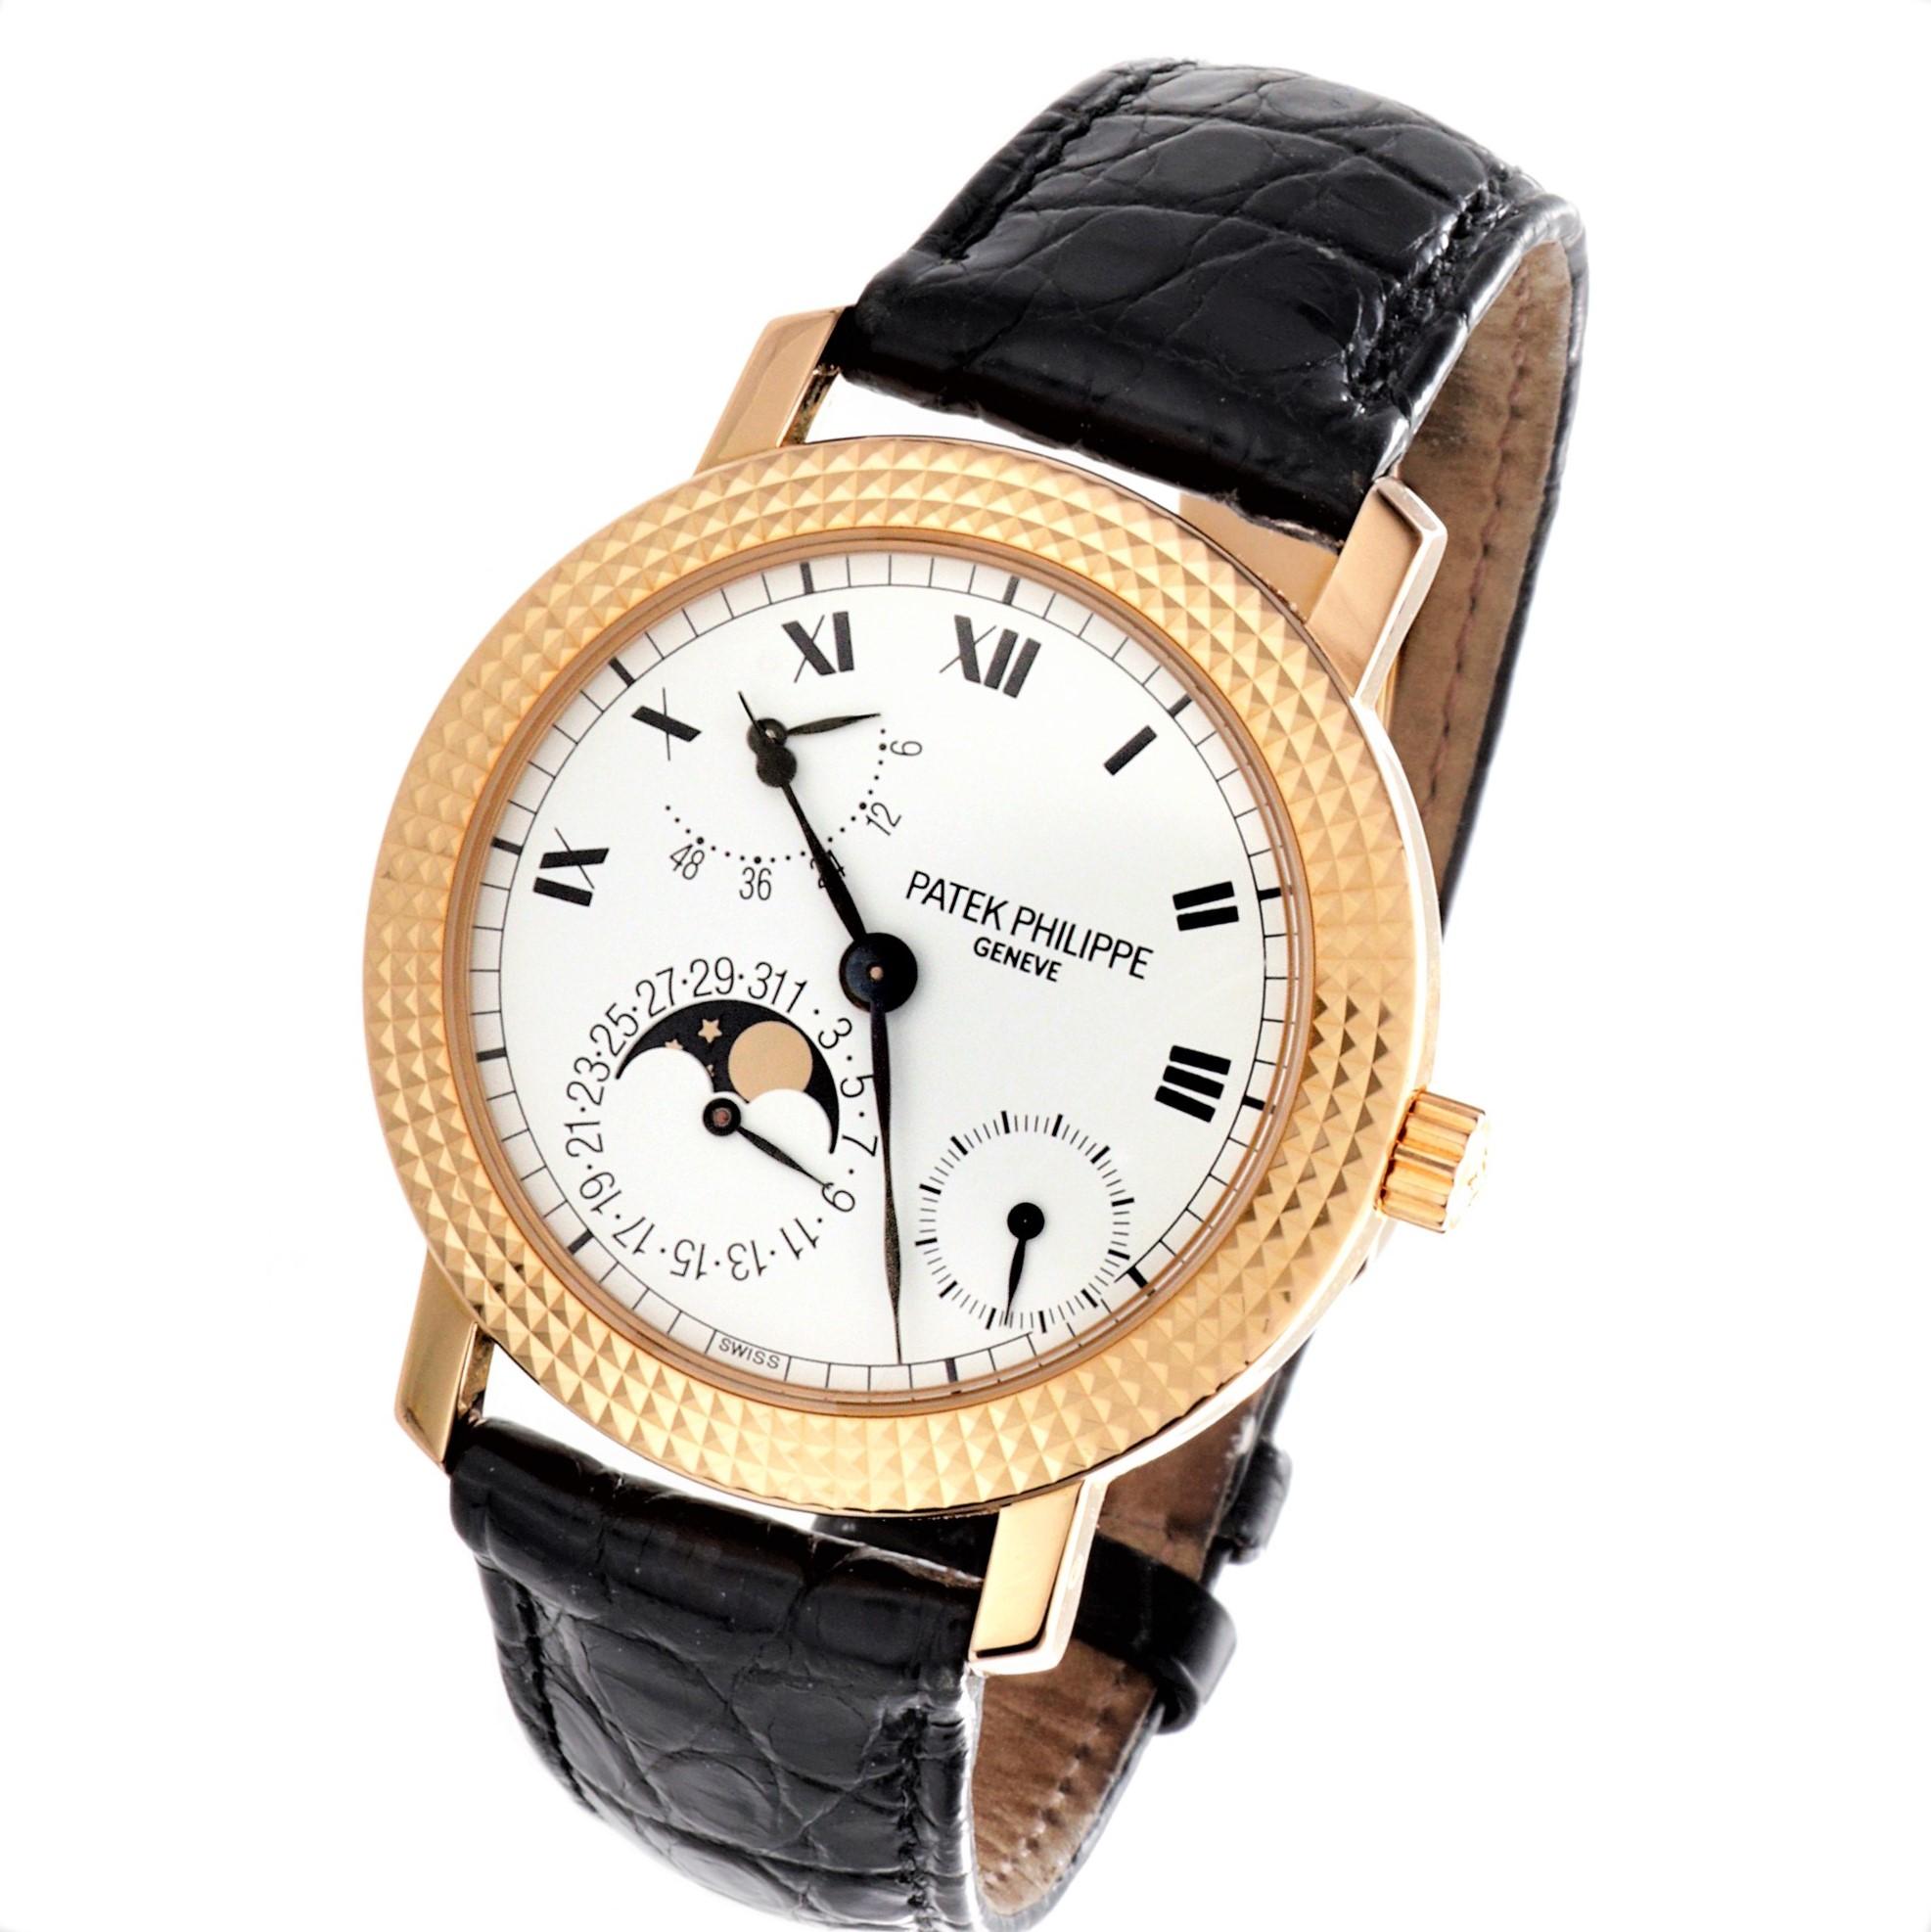 Modern Patek Philippe 5057R 25th Anniversary Jubilee Limited Edition Watch, circa 1997